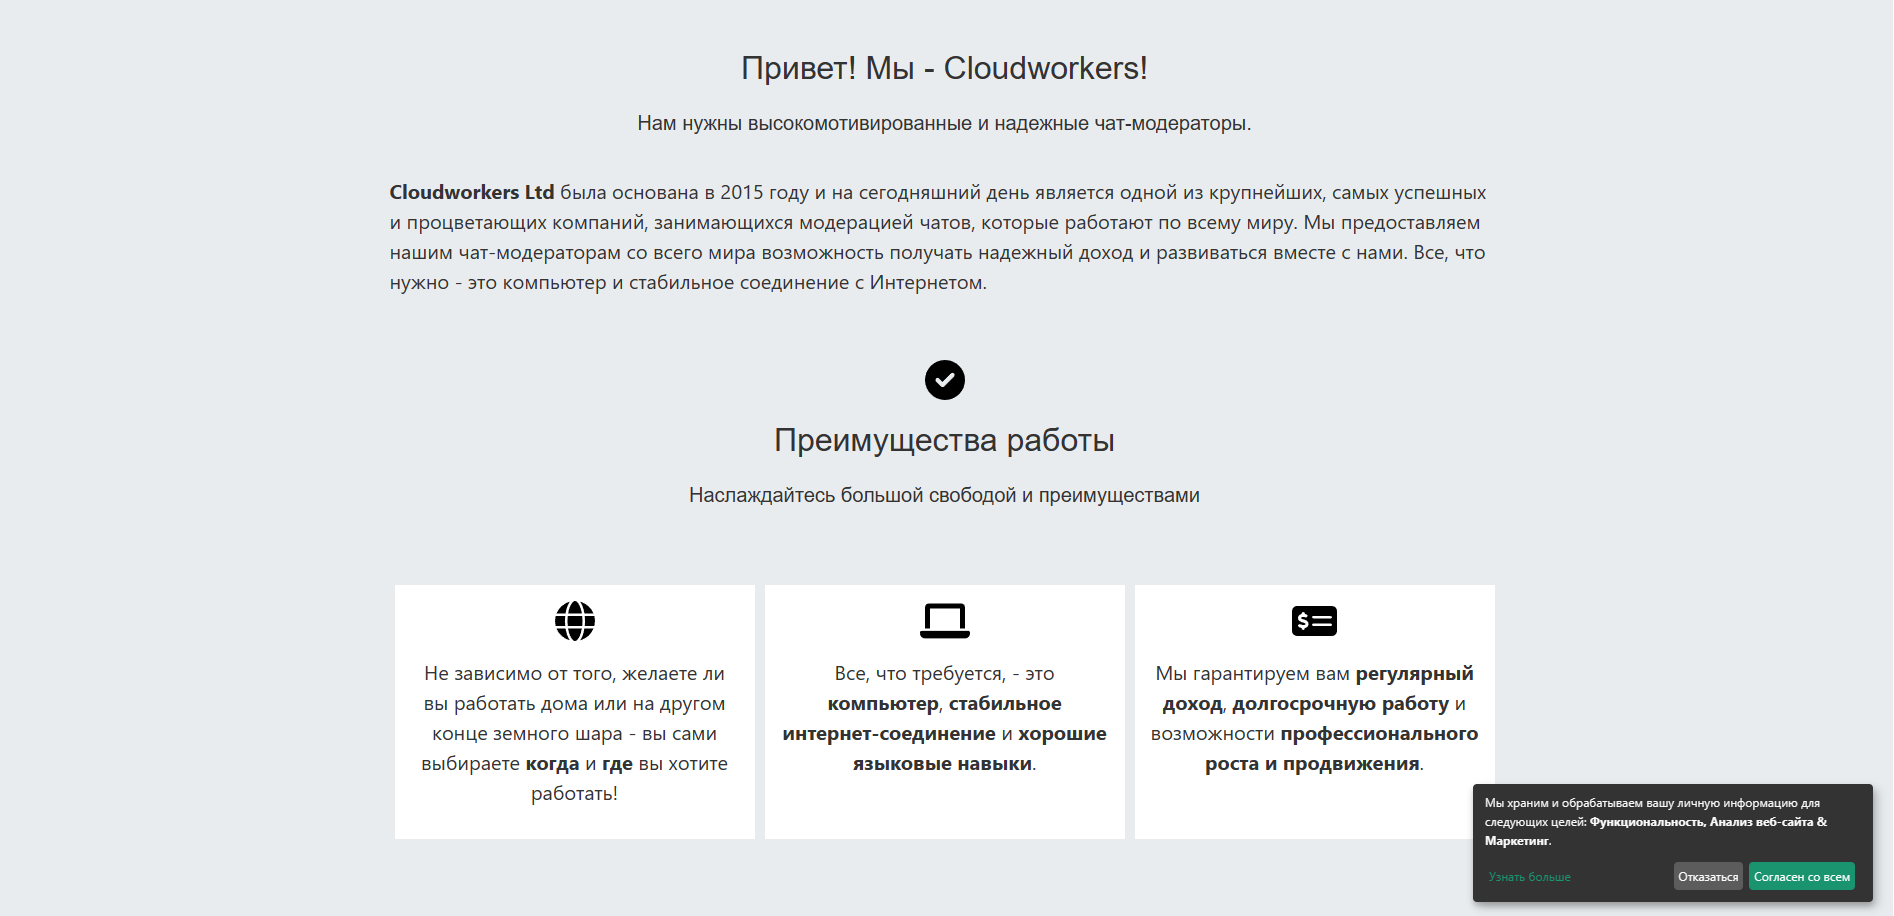 Cloudworkers – отзывы о работе в компании cloudworkers.company